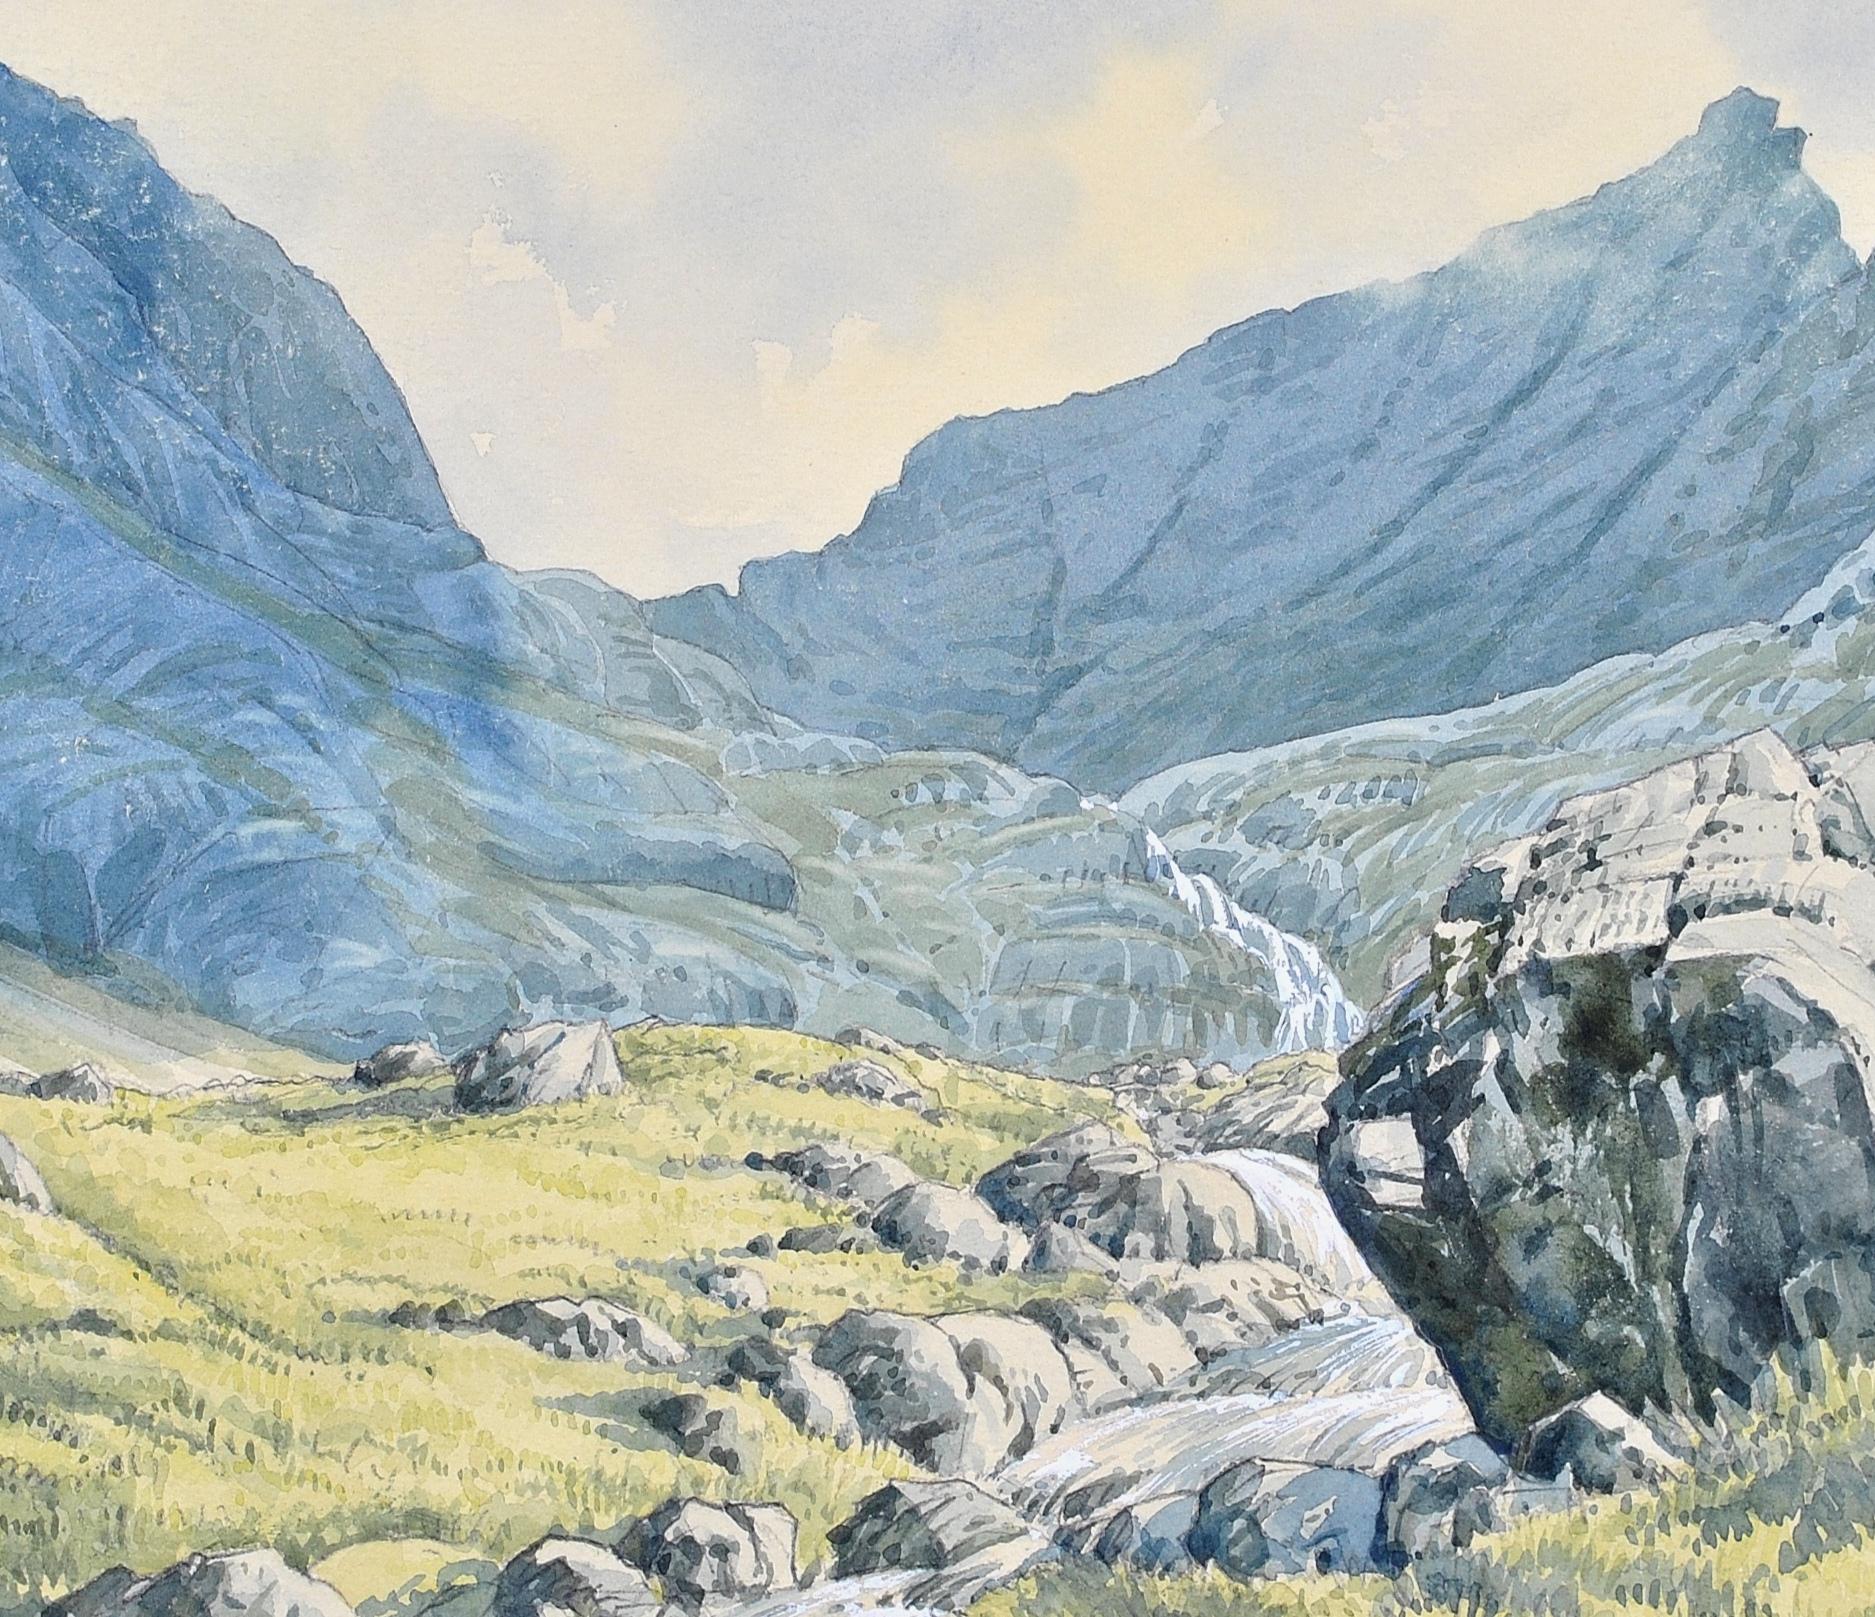 Coire Lagan - Isle of Skye Scottish Mountain Range Watercolor Landscape Painting - Art by James Ingham Riley